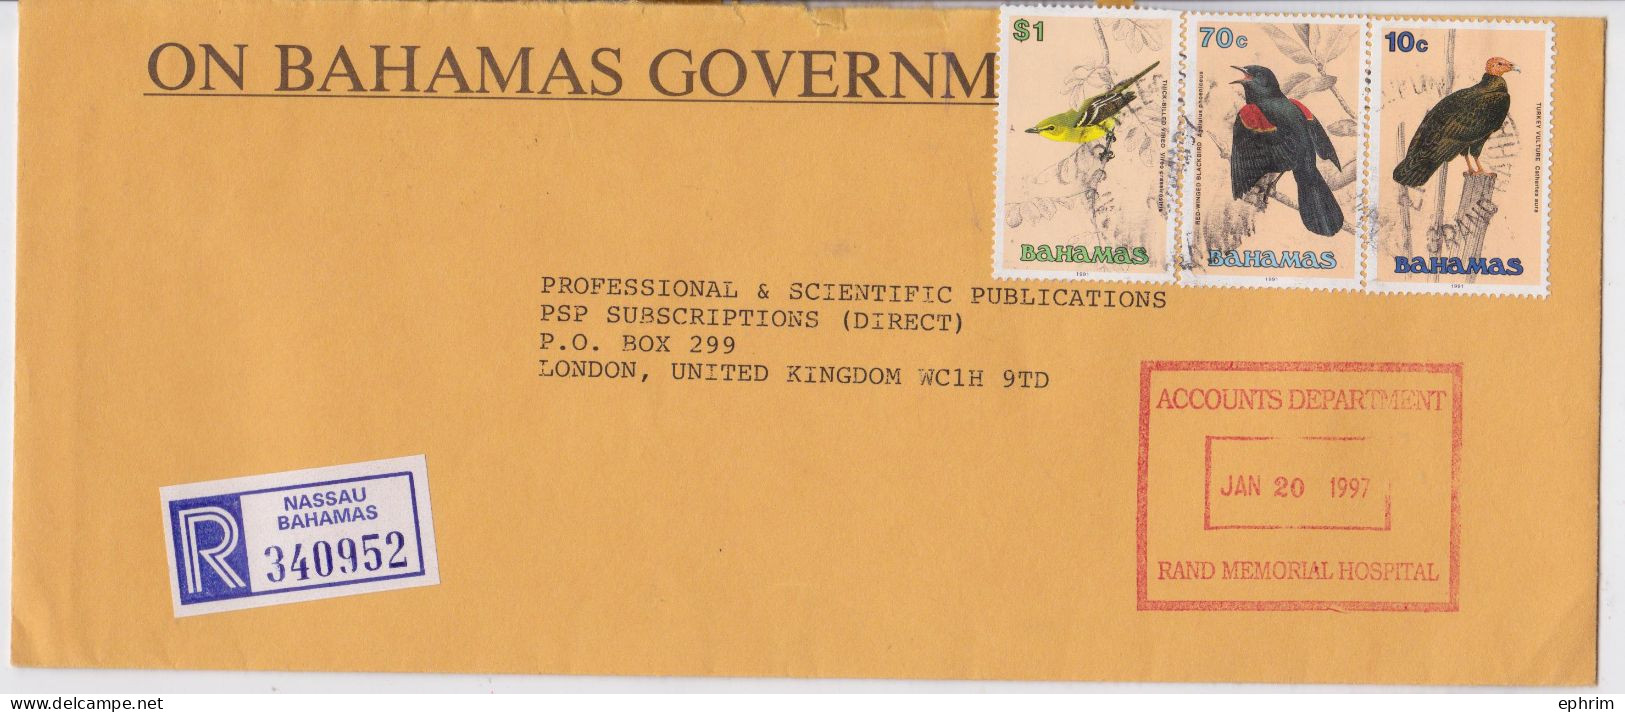 Bahamas Nassau Lettre Recommandée Timbre Oiseau 1991 Bird Stamp Registered Air Mail Cover 1997 - Bahamas (1973-...)